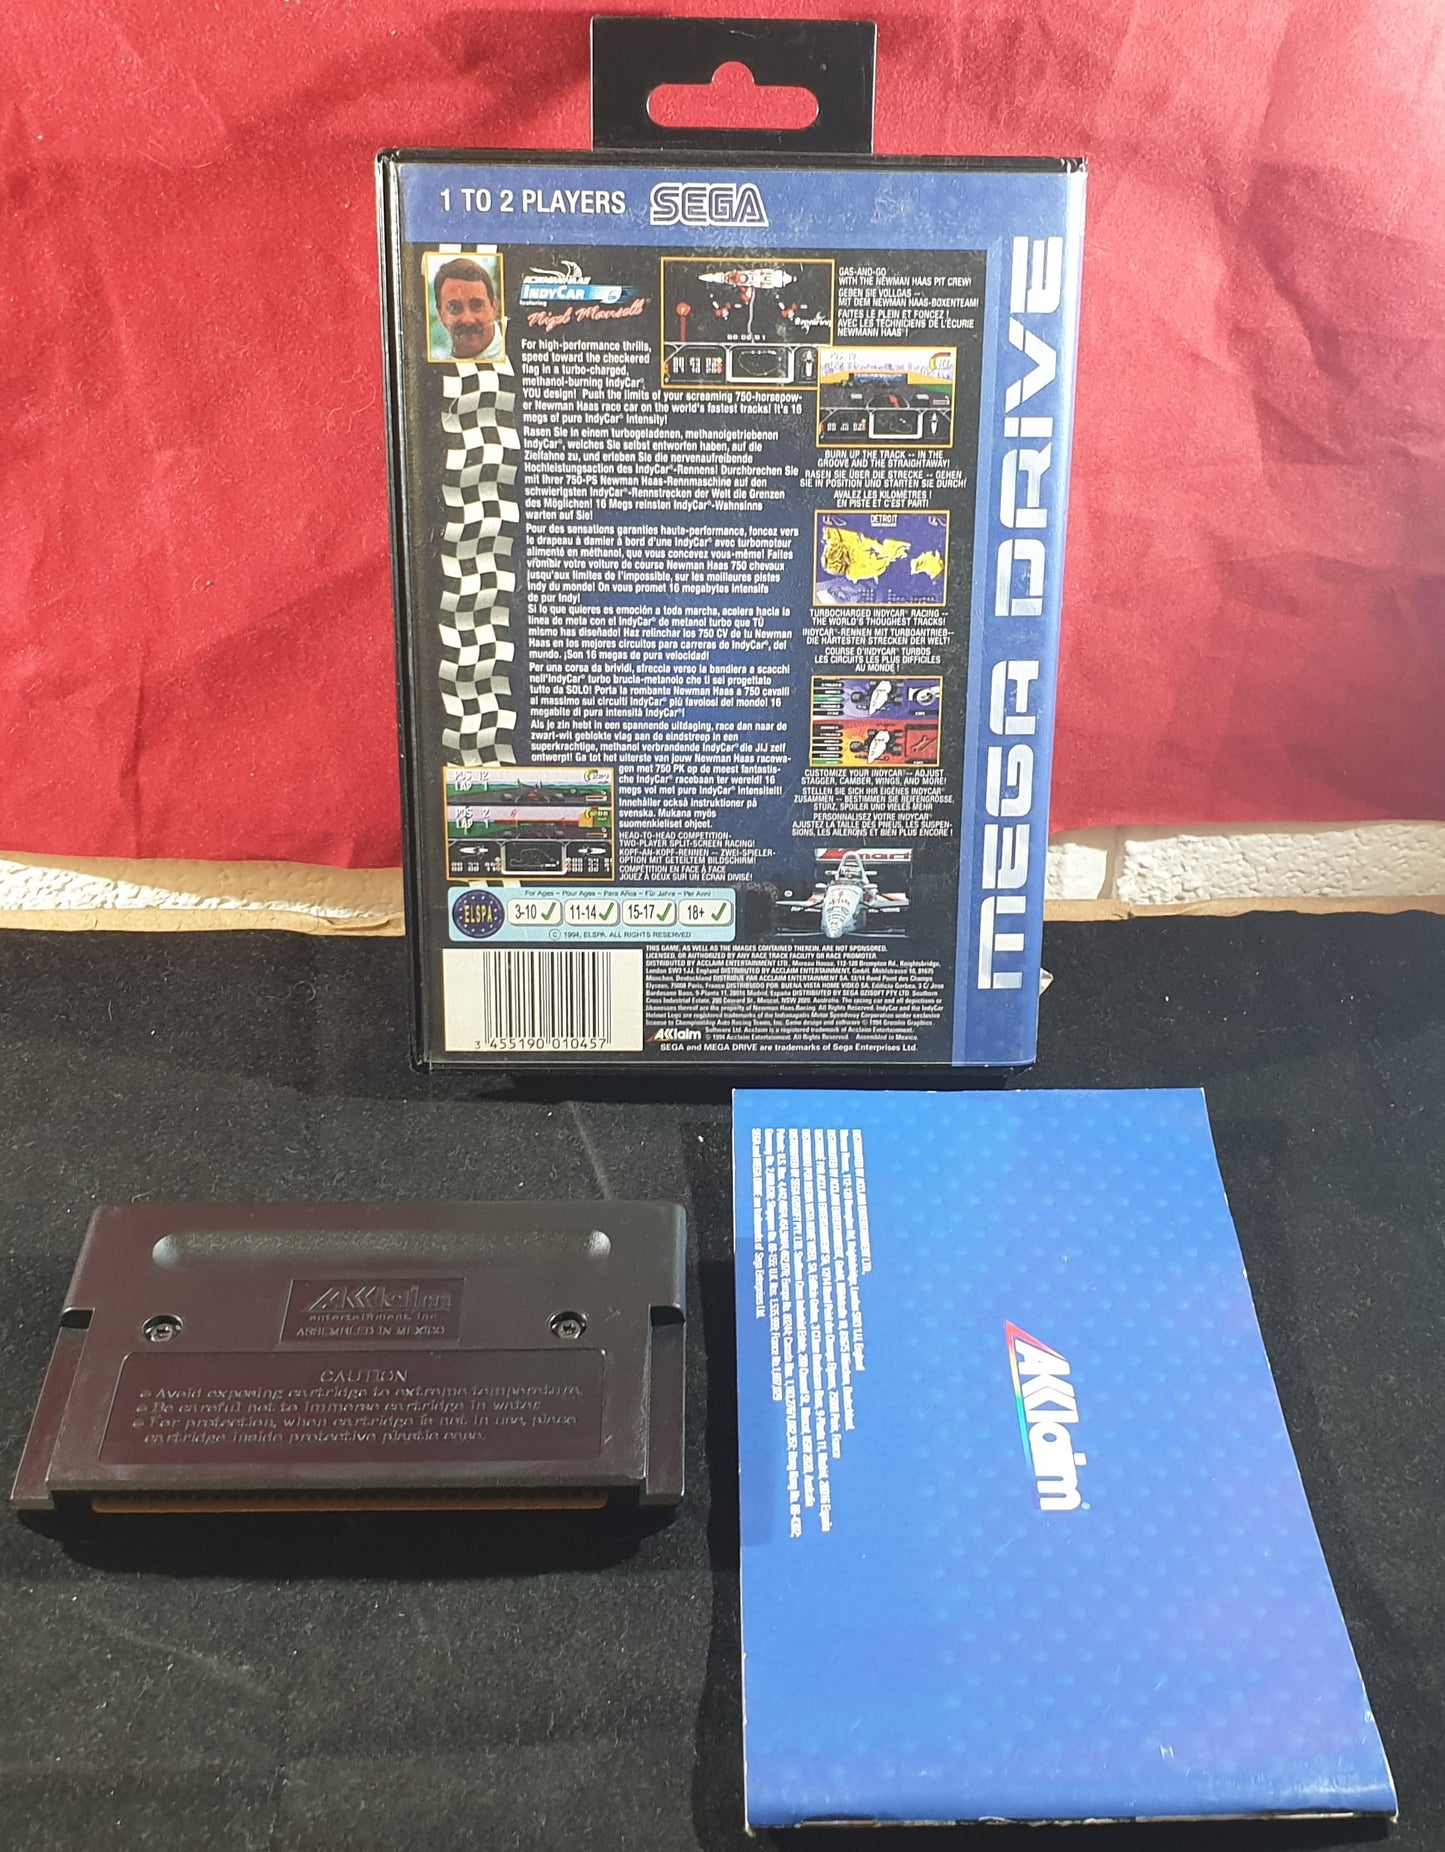 Newman Haas Indy Car Featuring Nigel Mansell Sega Mega Drive Game